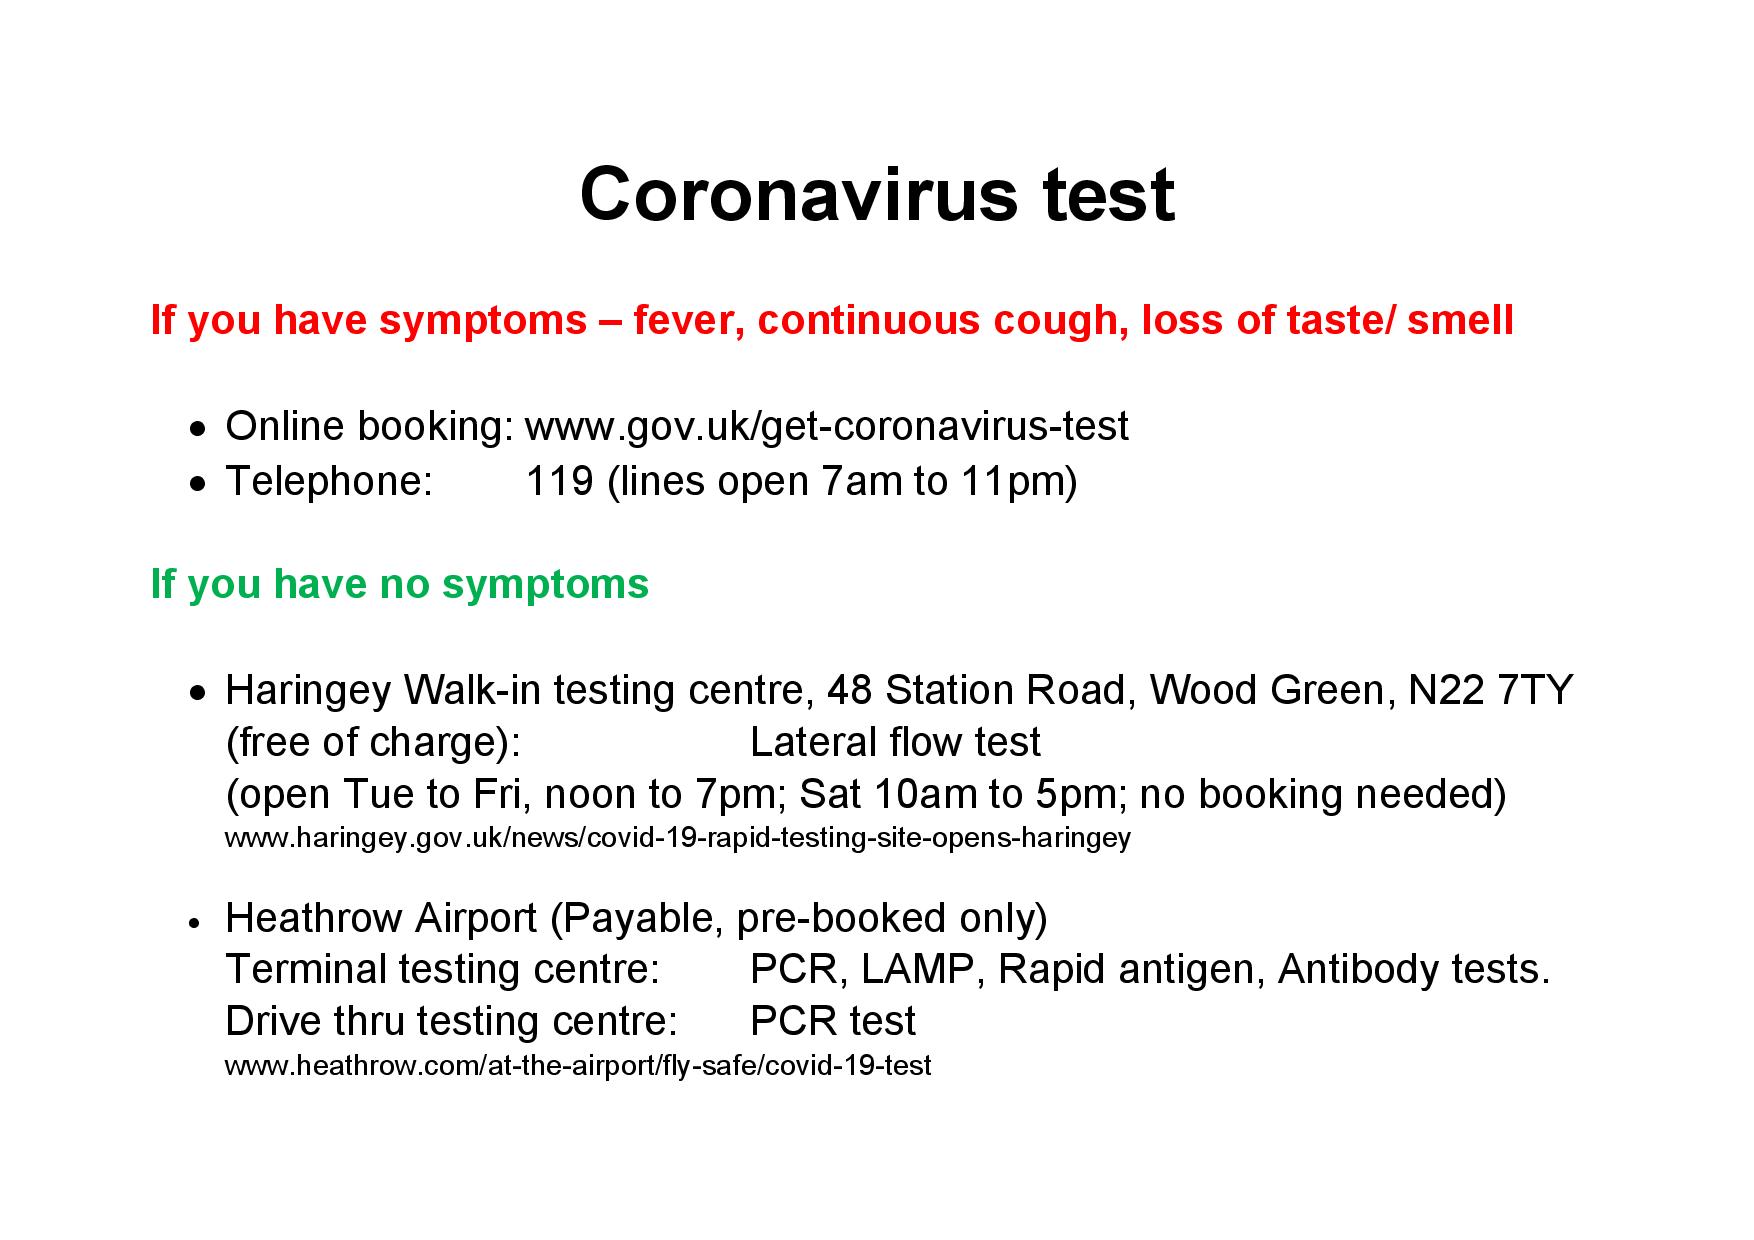 Coronavirus where you can go for test